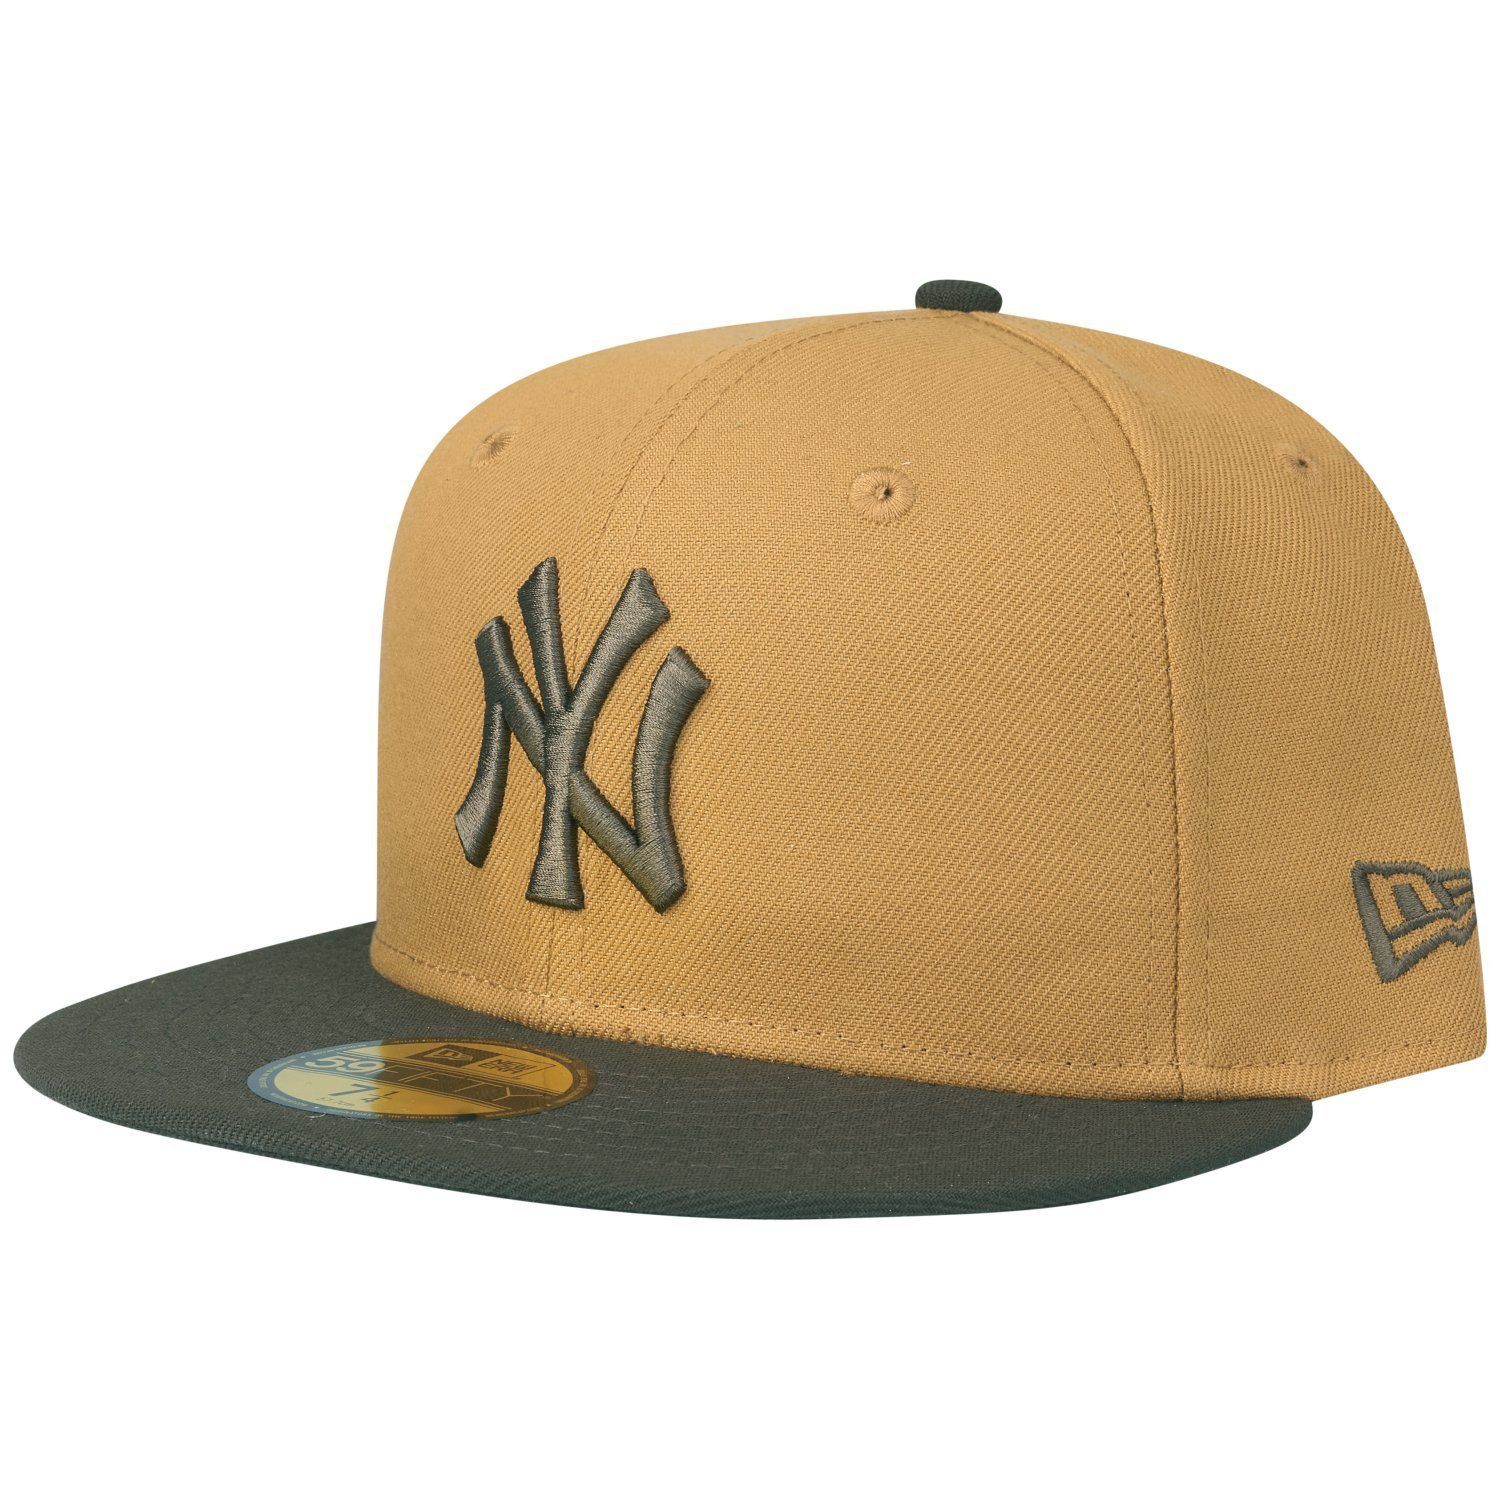 New New York Fitted Cap Era 59Fifty Yankees panama